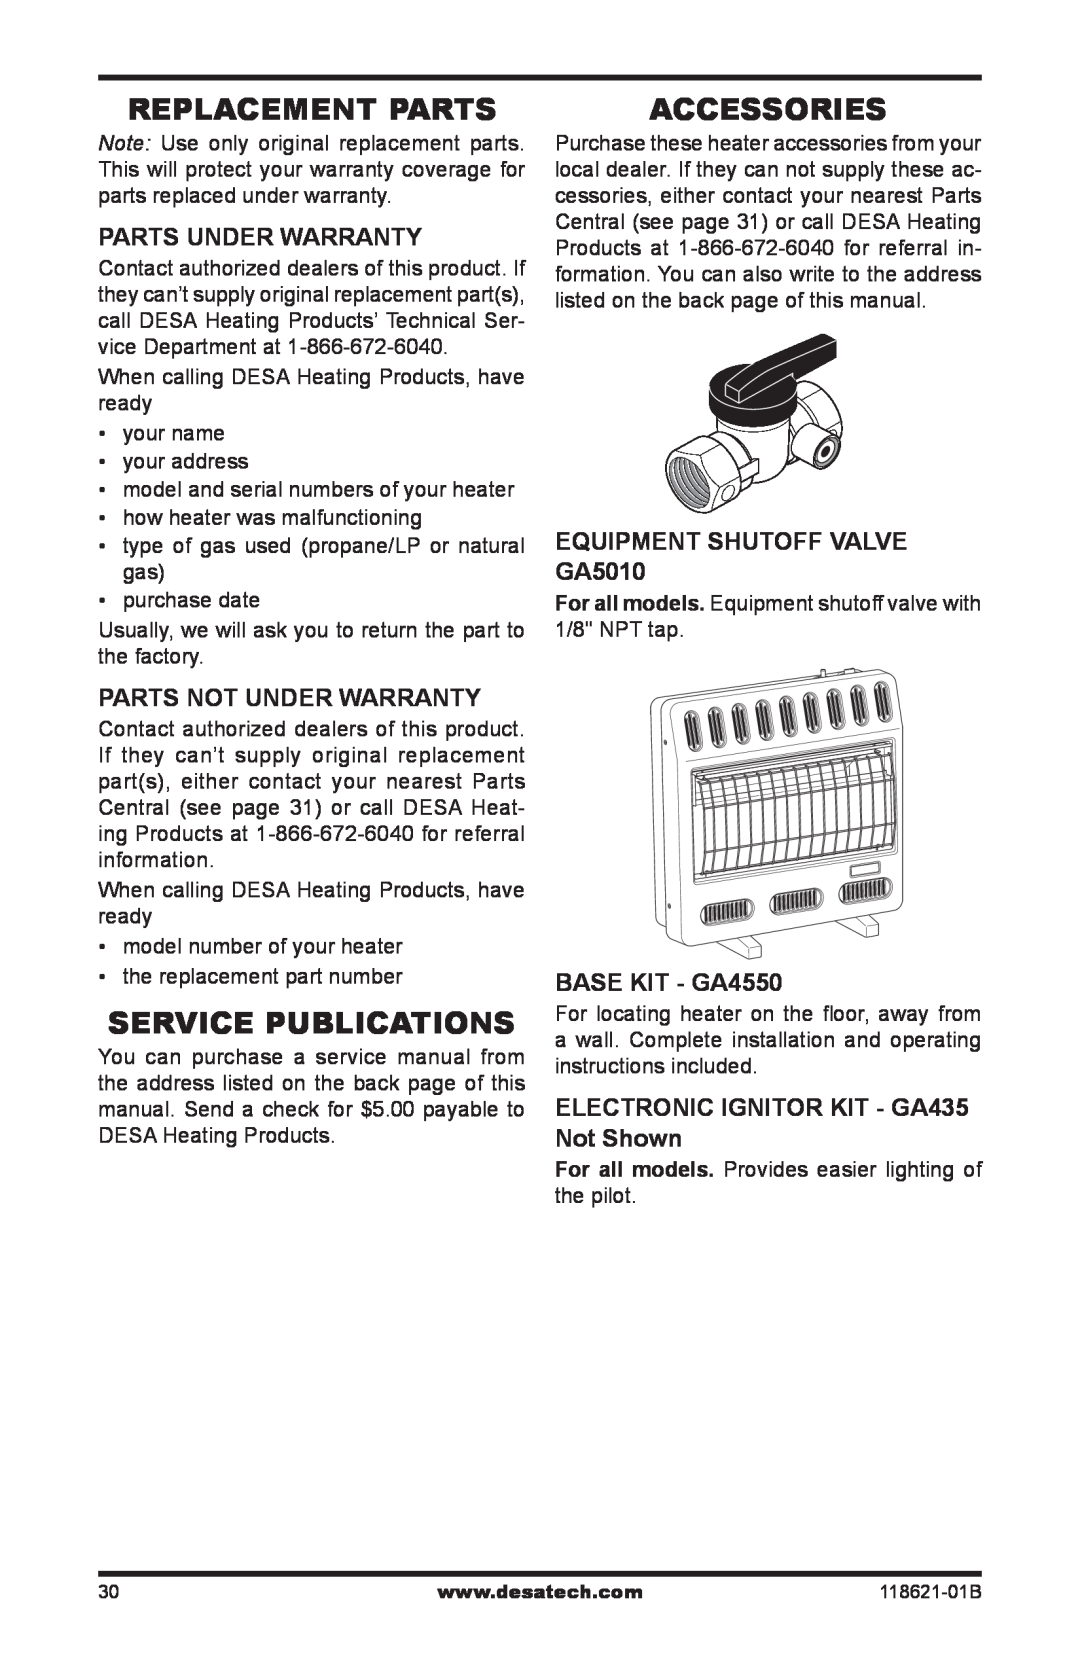 Desa NZ119 Replacement Parts, Accessories, Service Publications, Parts Under Warranty, equipment SHUTOFF VALVE GA5010 